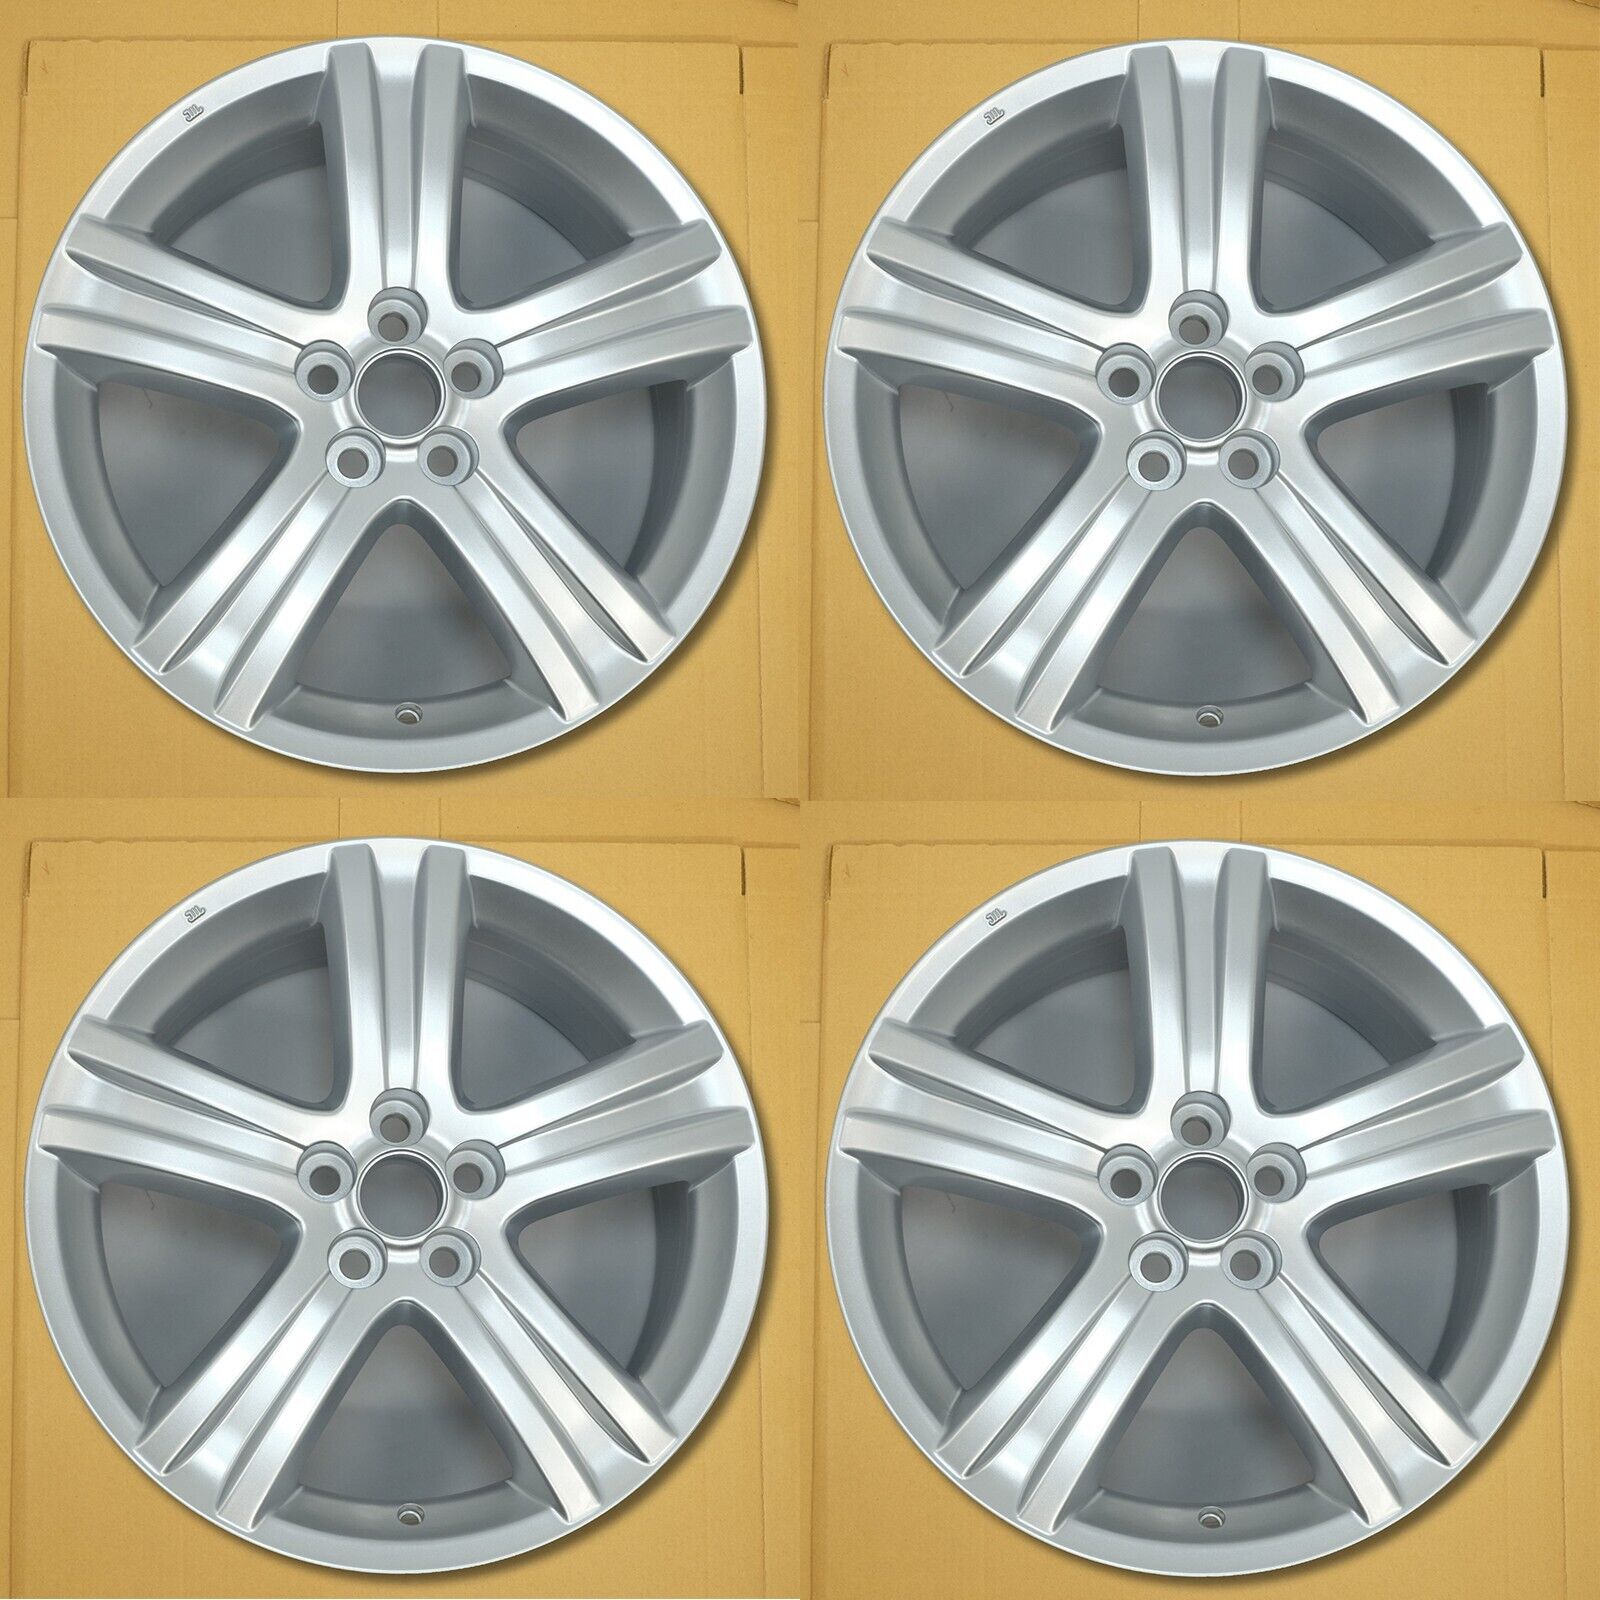 For Toyota Corolla Matrix OEM Design Wheel 17